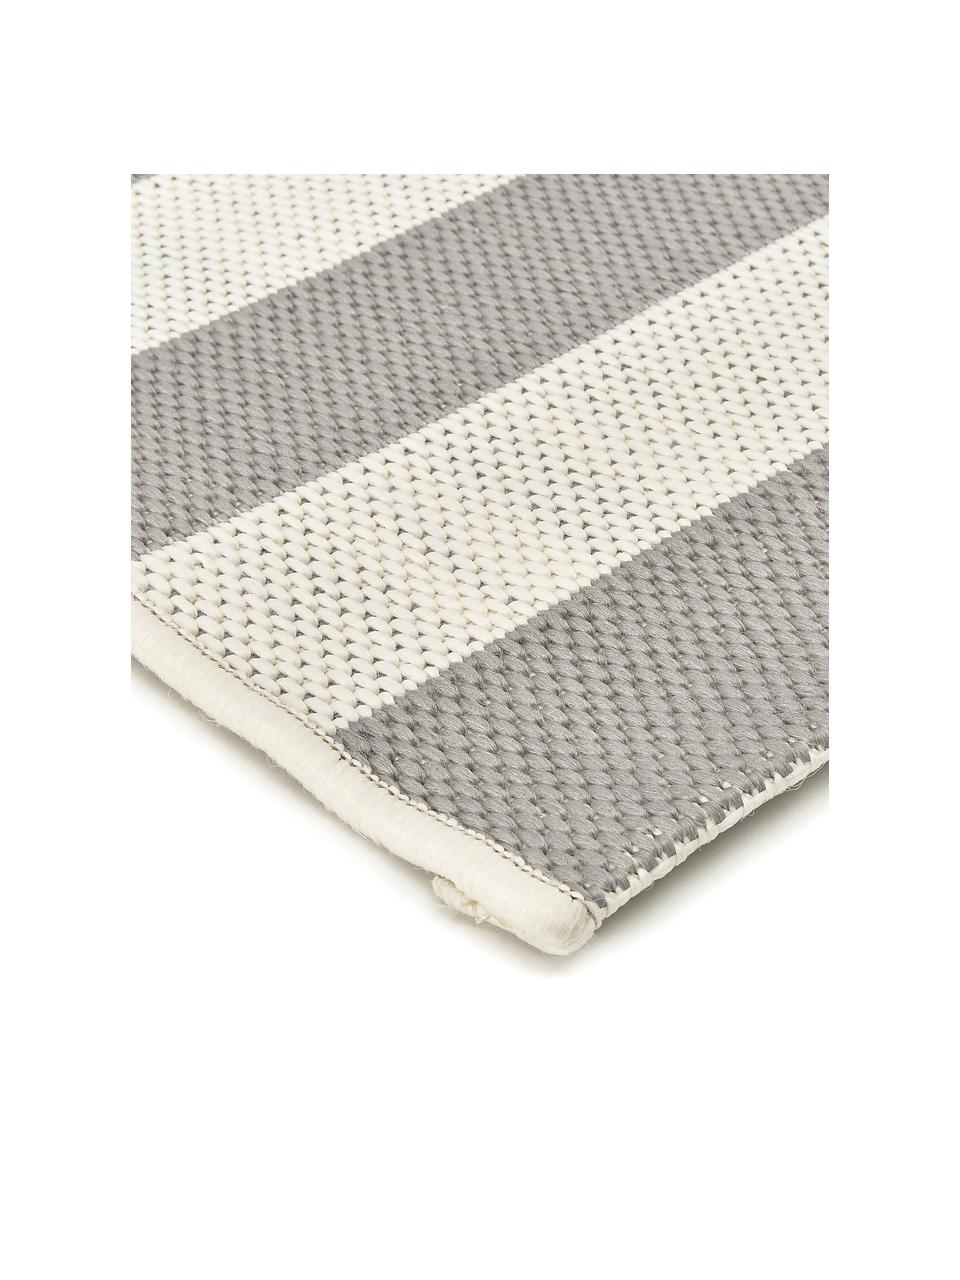 Tapis d'extérieur gris à jeu de rayures Axa, 86 % polypropylène, 14 % polyester, Blanc crème, gris, larg. 80 x long. 250 cm